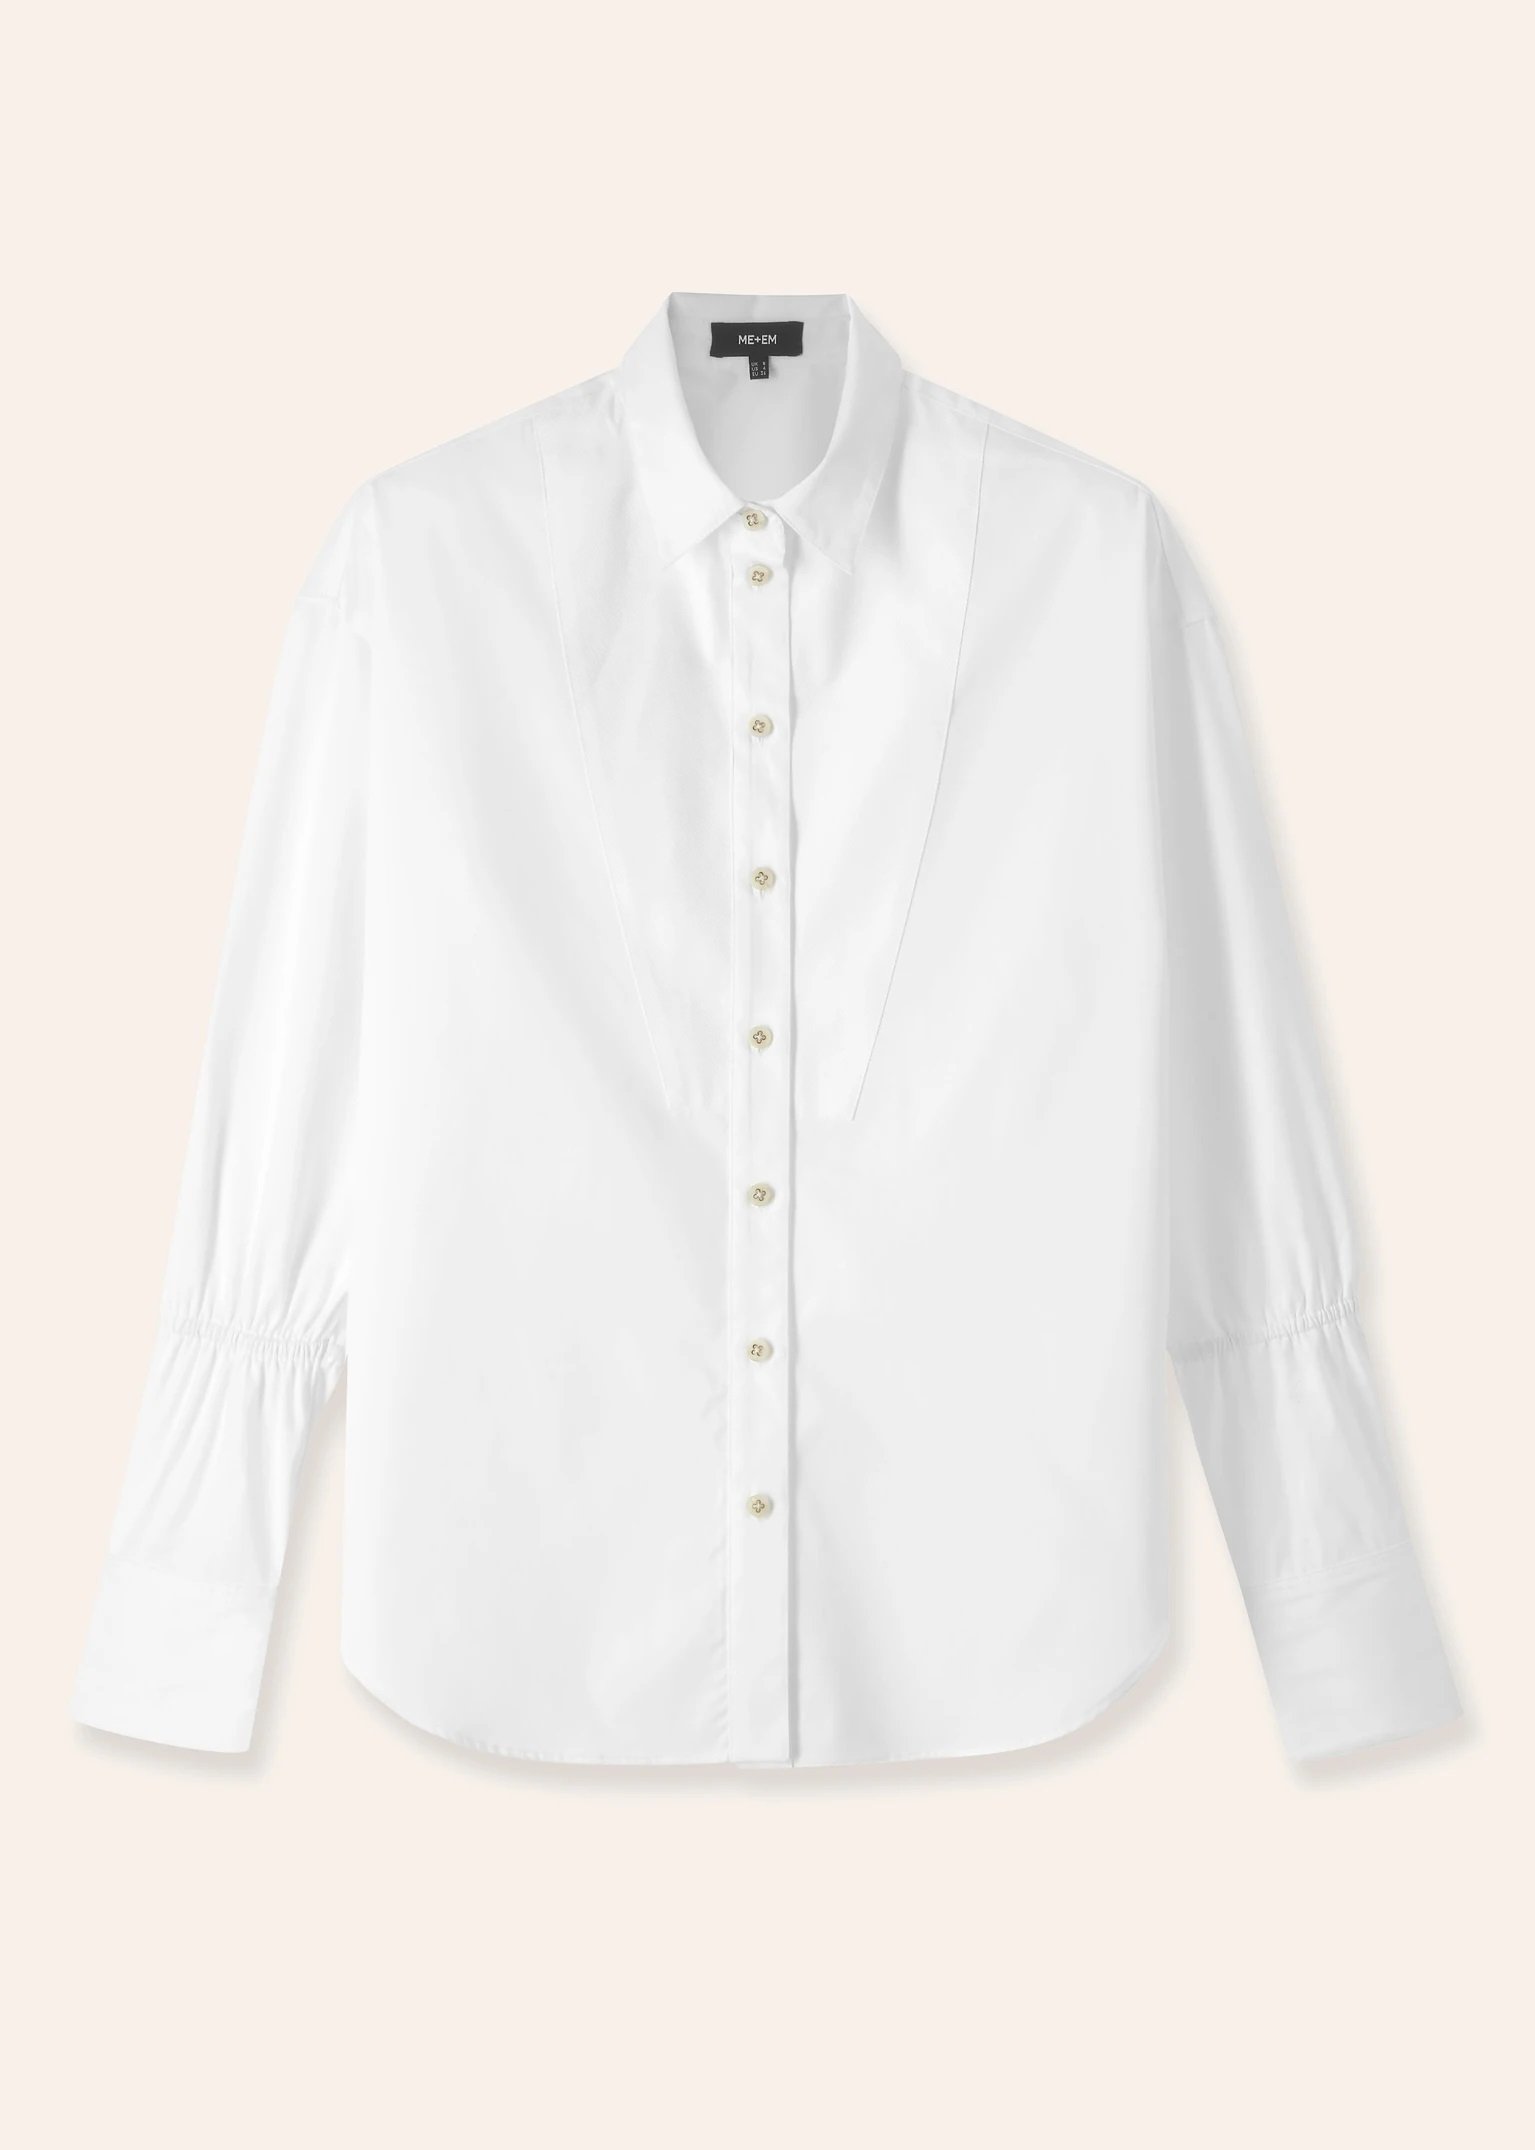 ME+EM Crease Less Cotton Elastic Sleeve Shirt in White.jpg